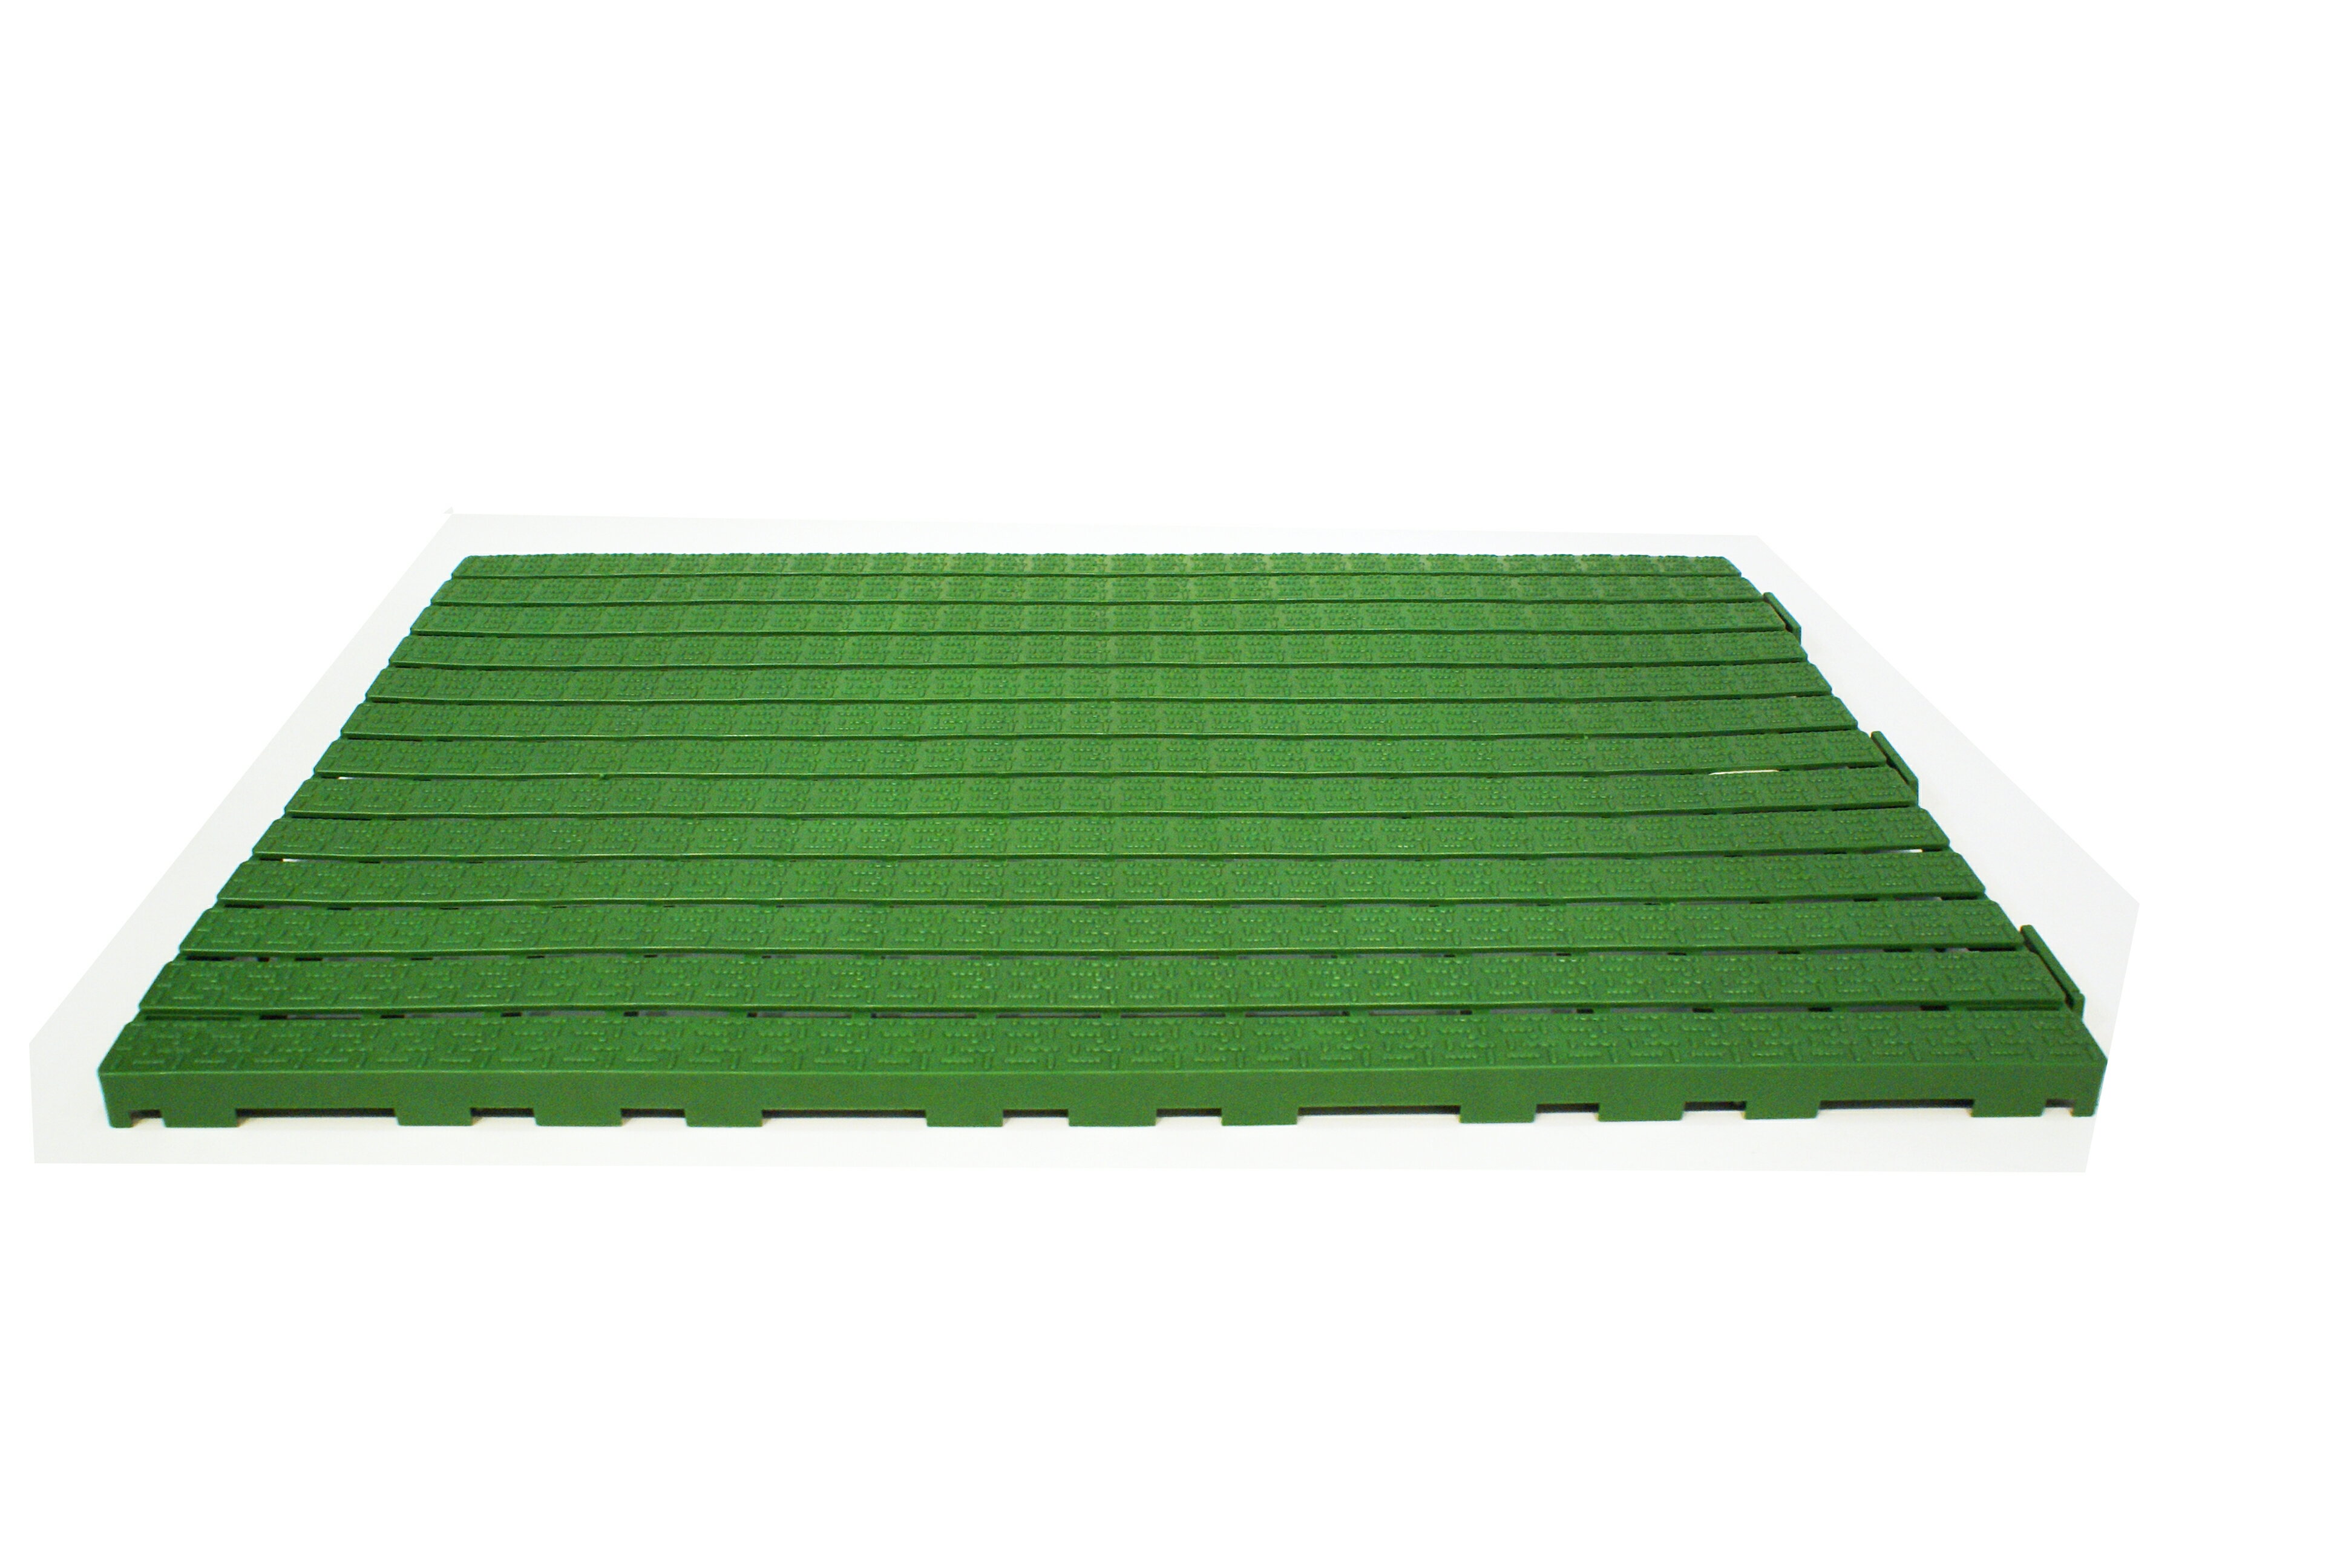 A級 PE 工業棧板 45x60x2cm